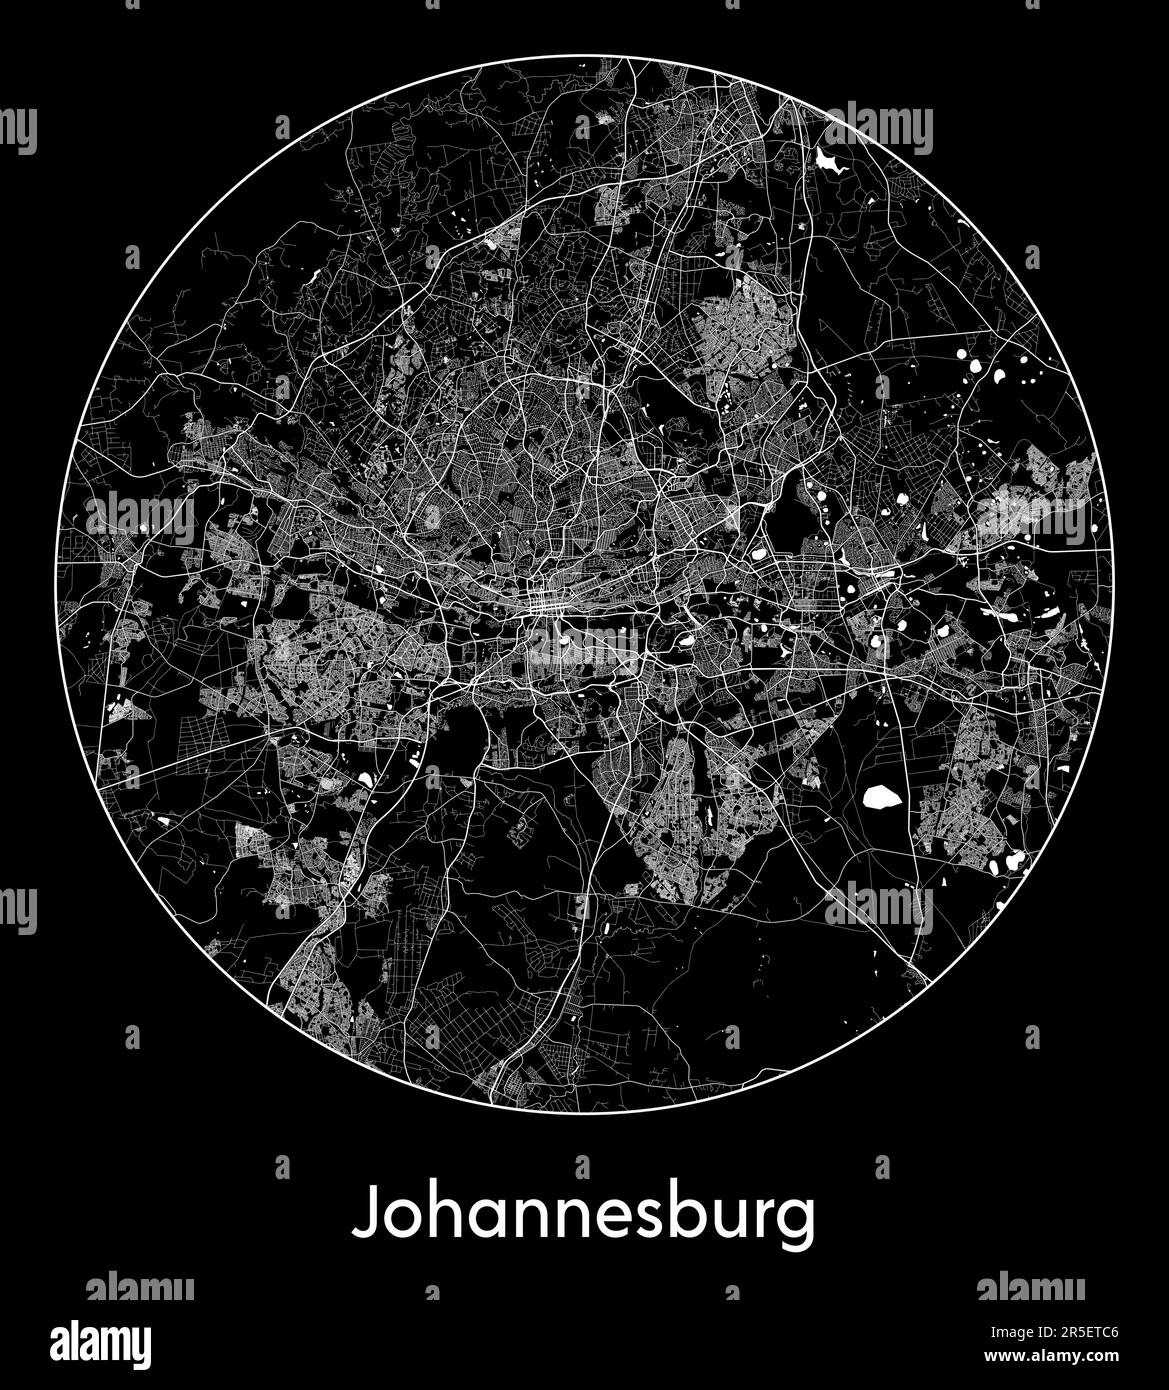 City Map Johannesburg South Africa Africa vector illustration Stock ...